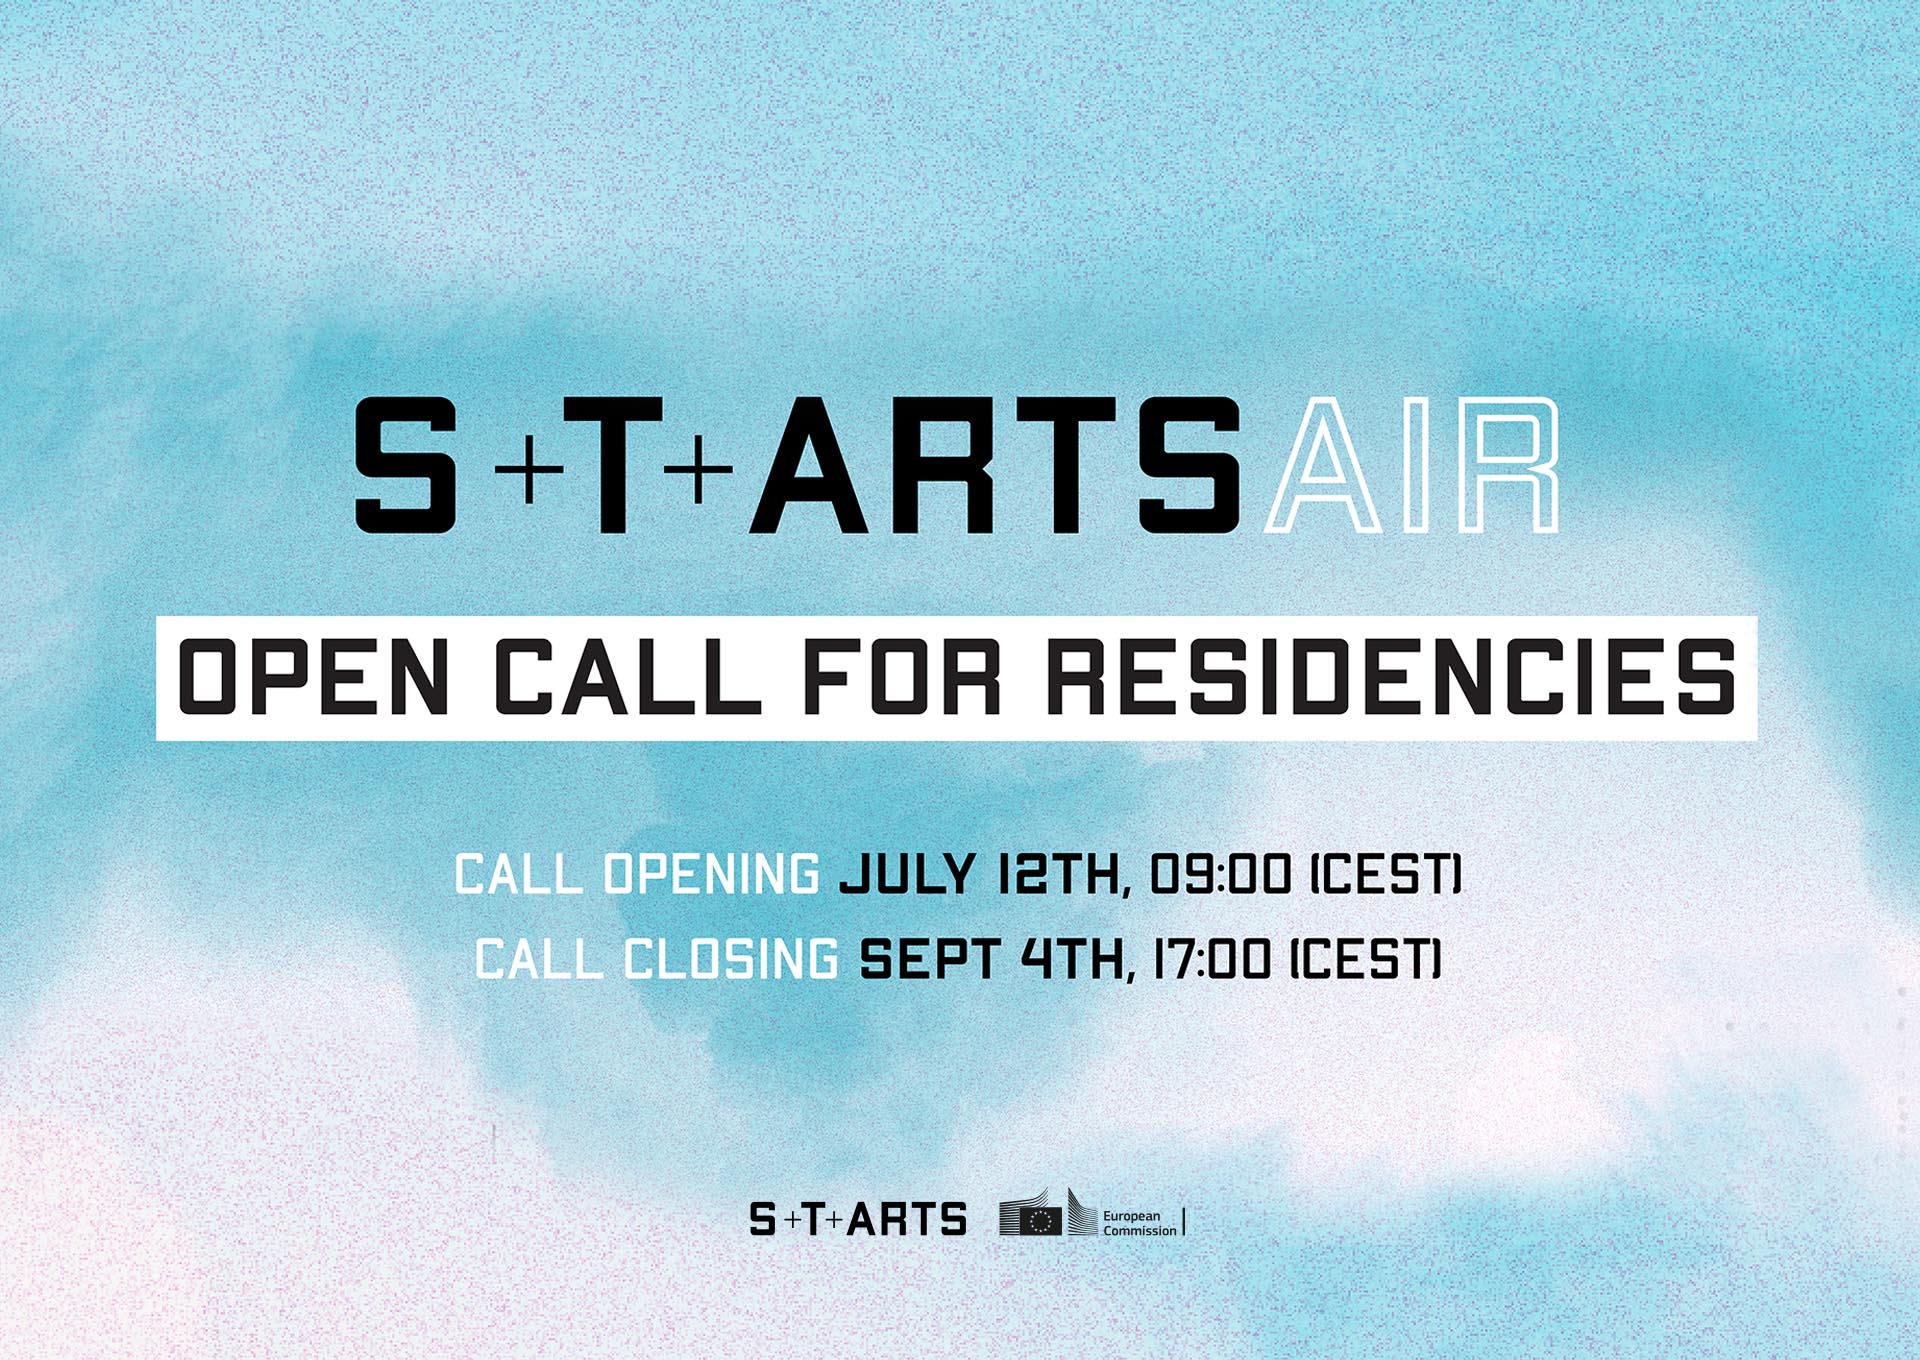 S+T+ARTS AIR Open Call 1